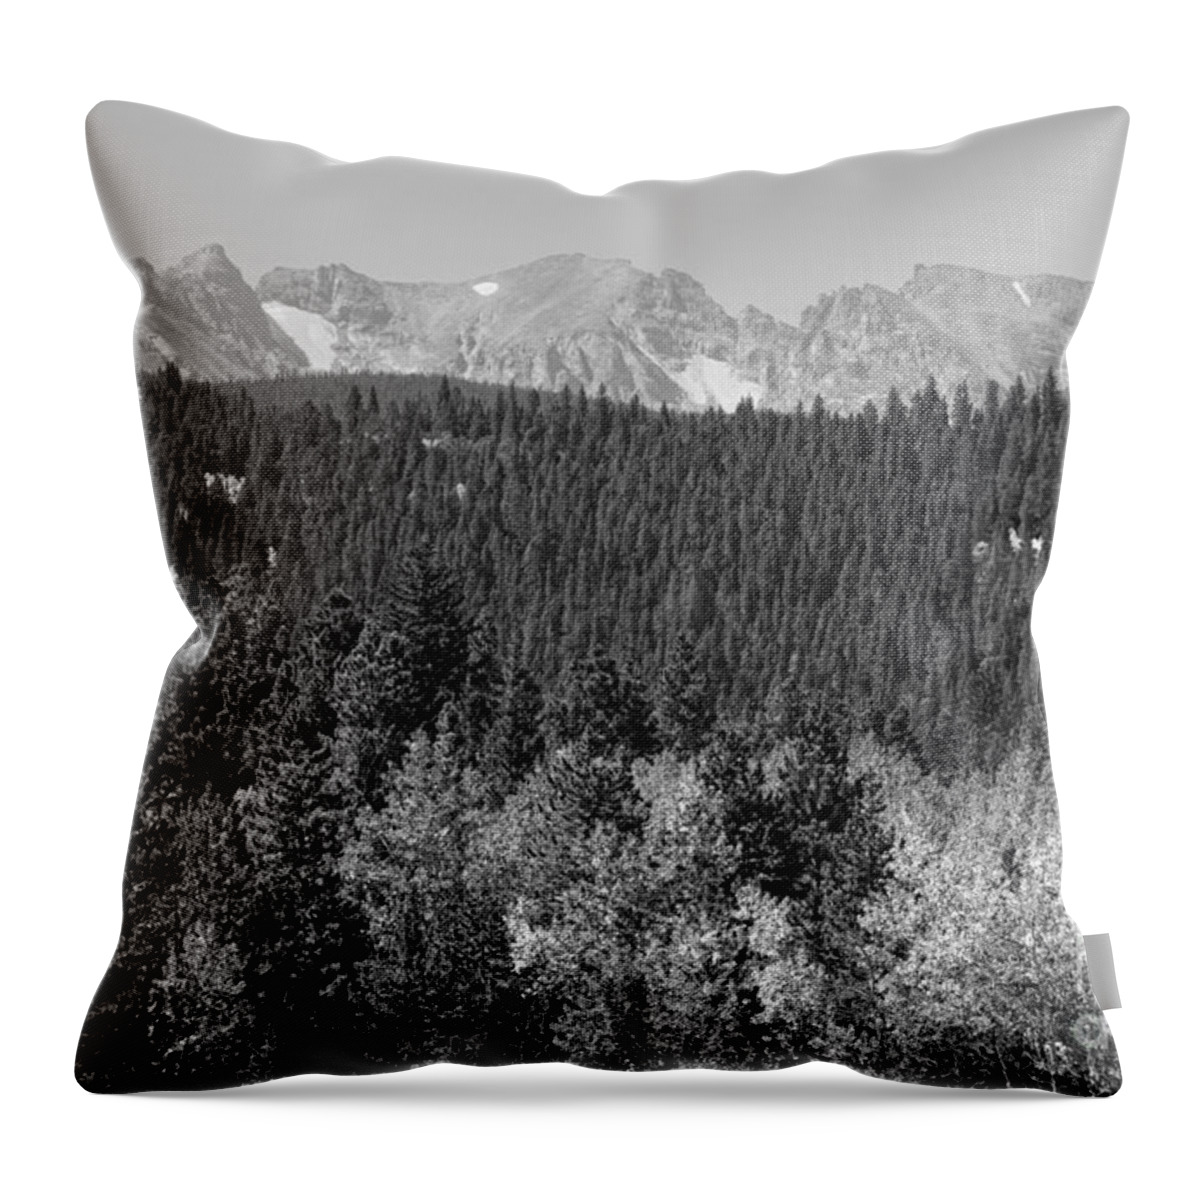 Colorado Throw Pillow featuring the photograph Colorado Rocky Mountain Continental Divide View BW by James BO Insogna